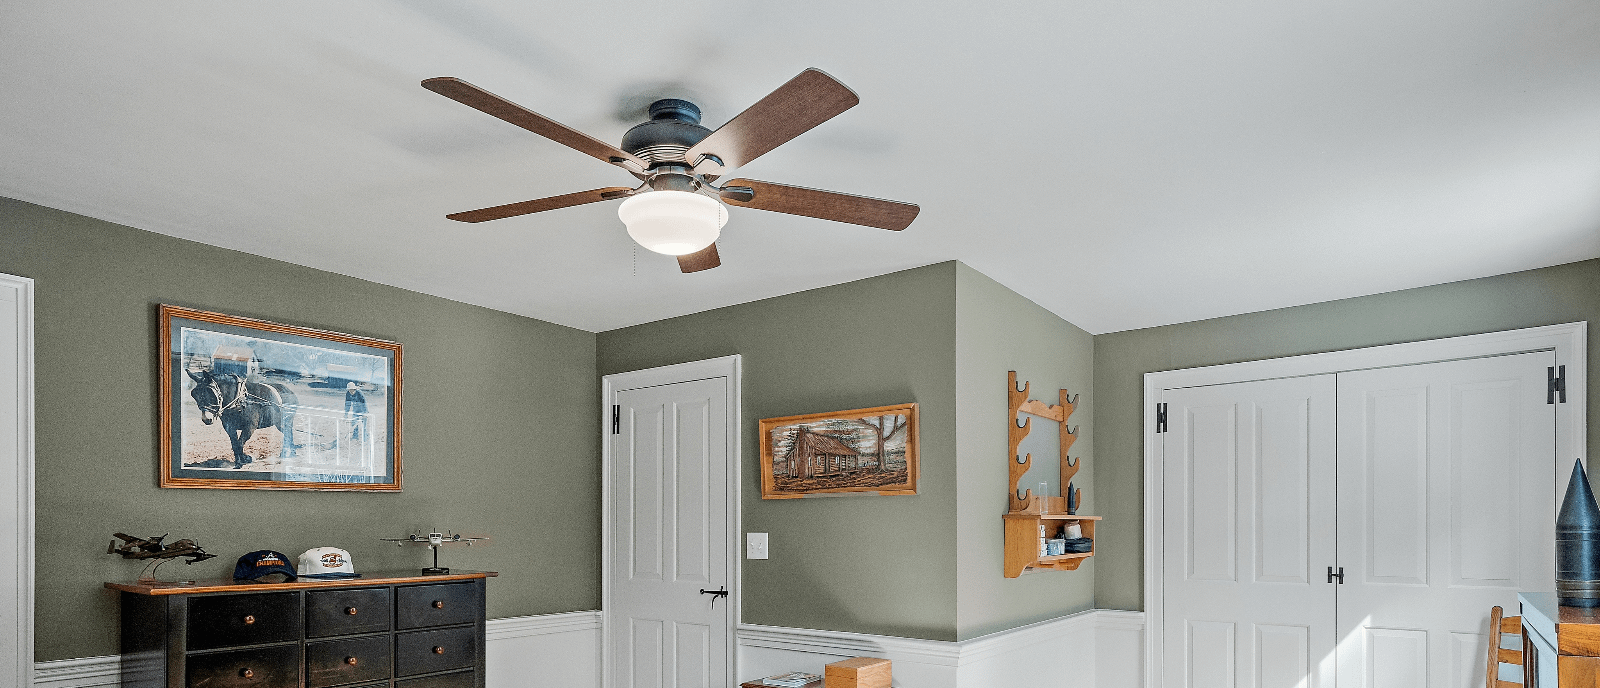 Ceiling fan on white ceiling in green room